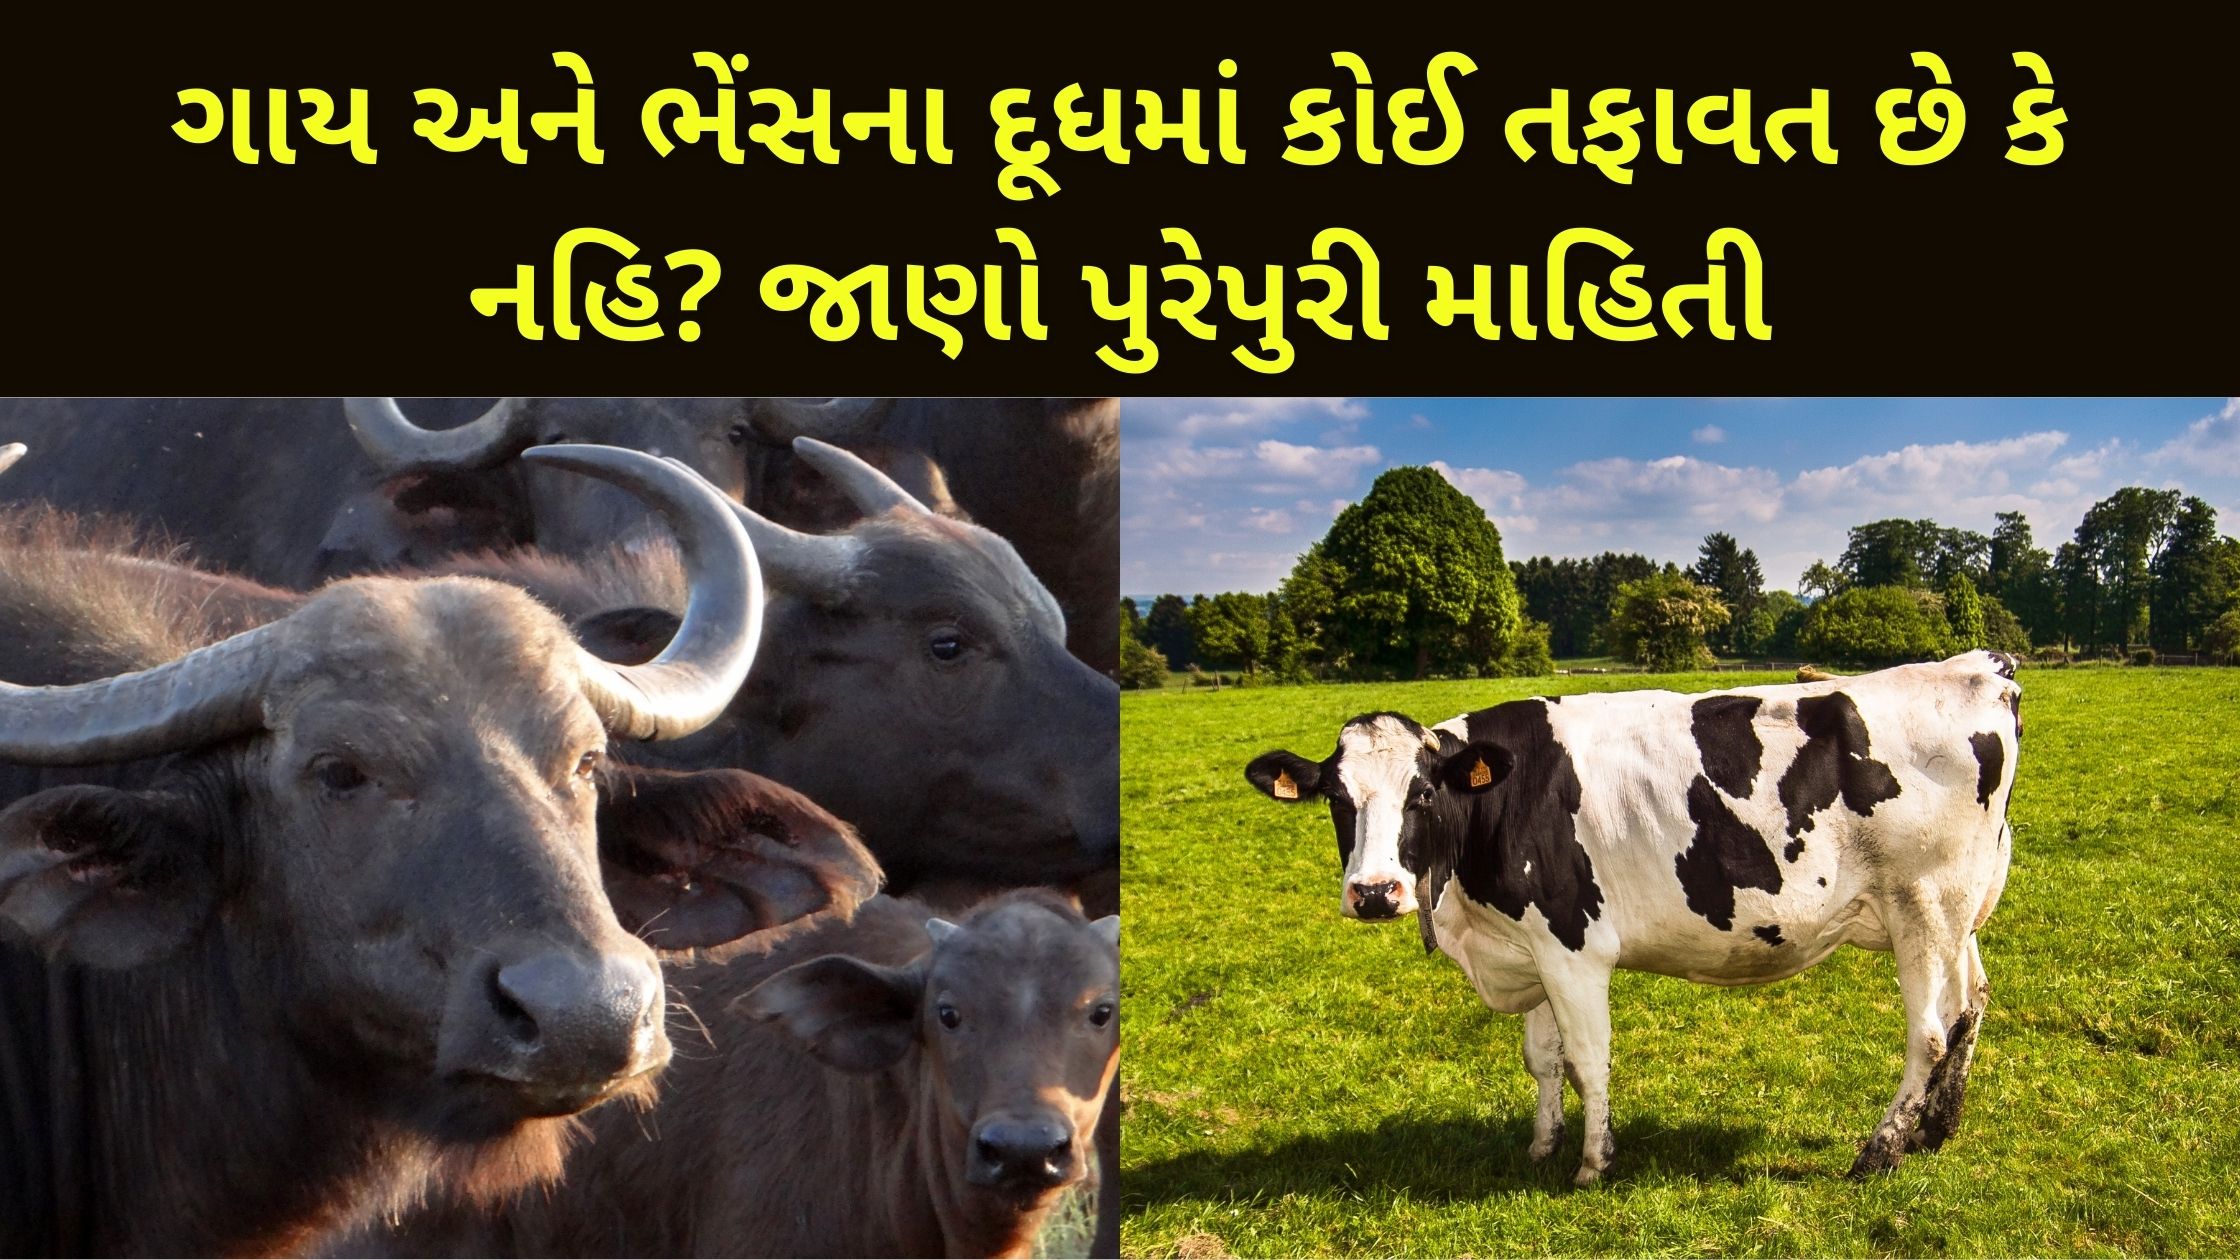 cow and buffalo milk difference in gujarati